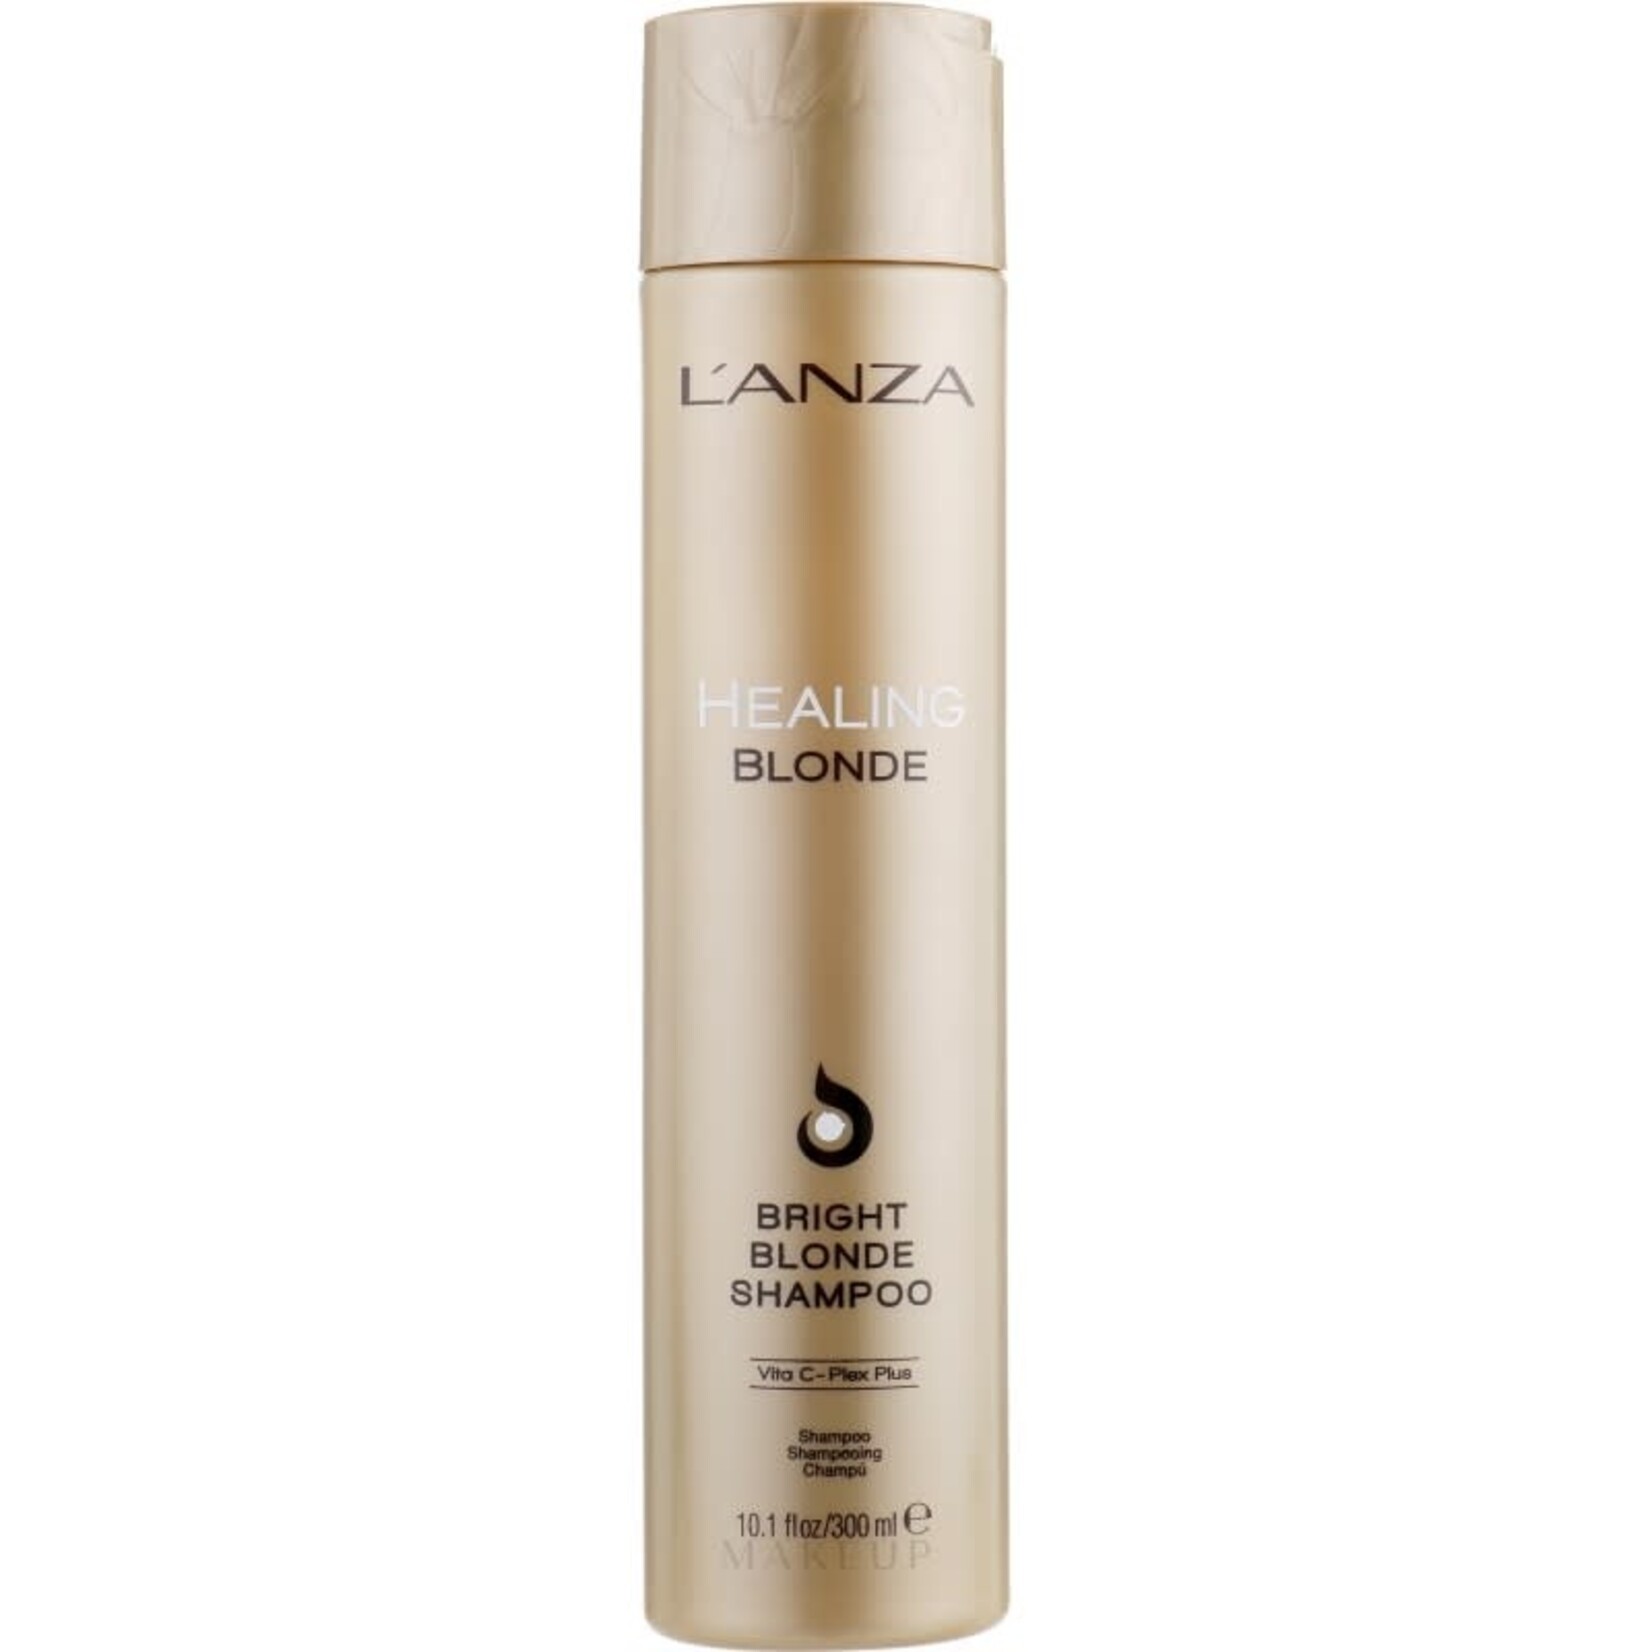 L'Anza L'anza - Healing blonde - Shampooing 300ml